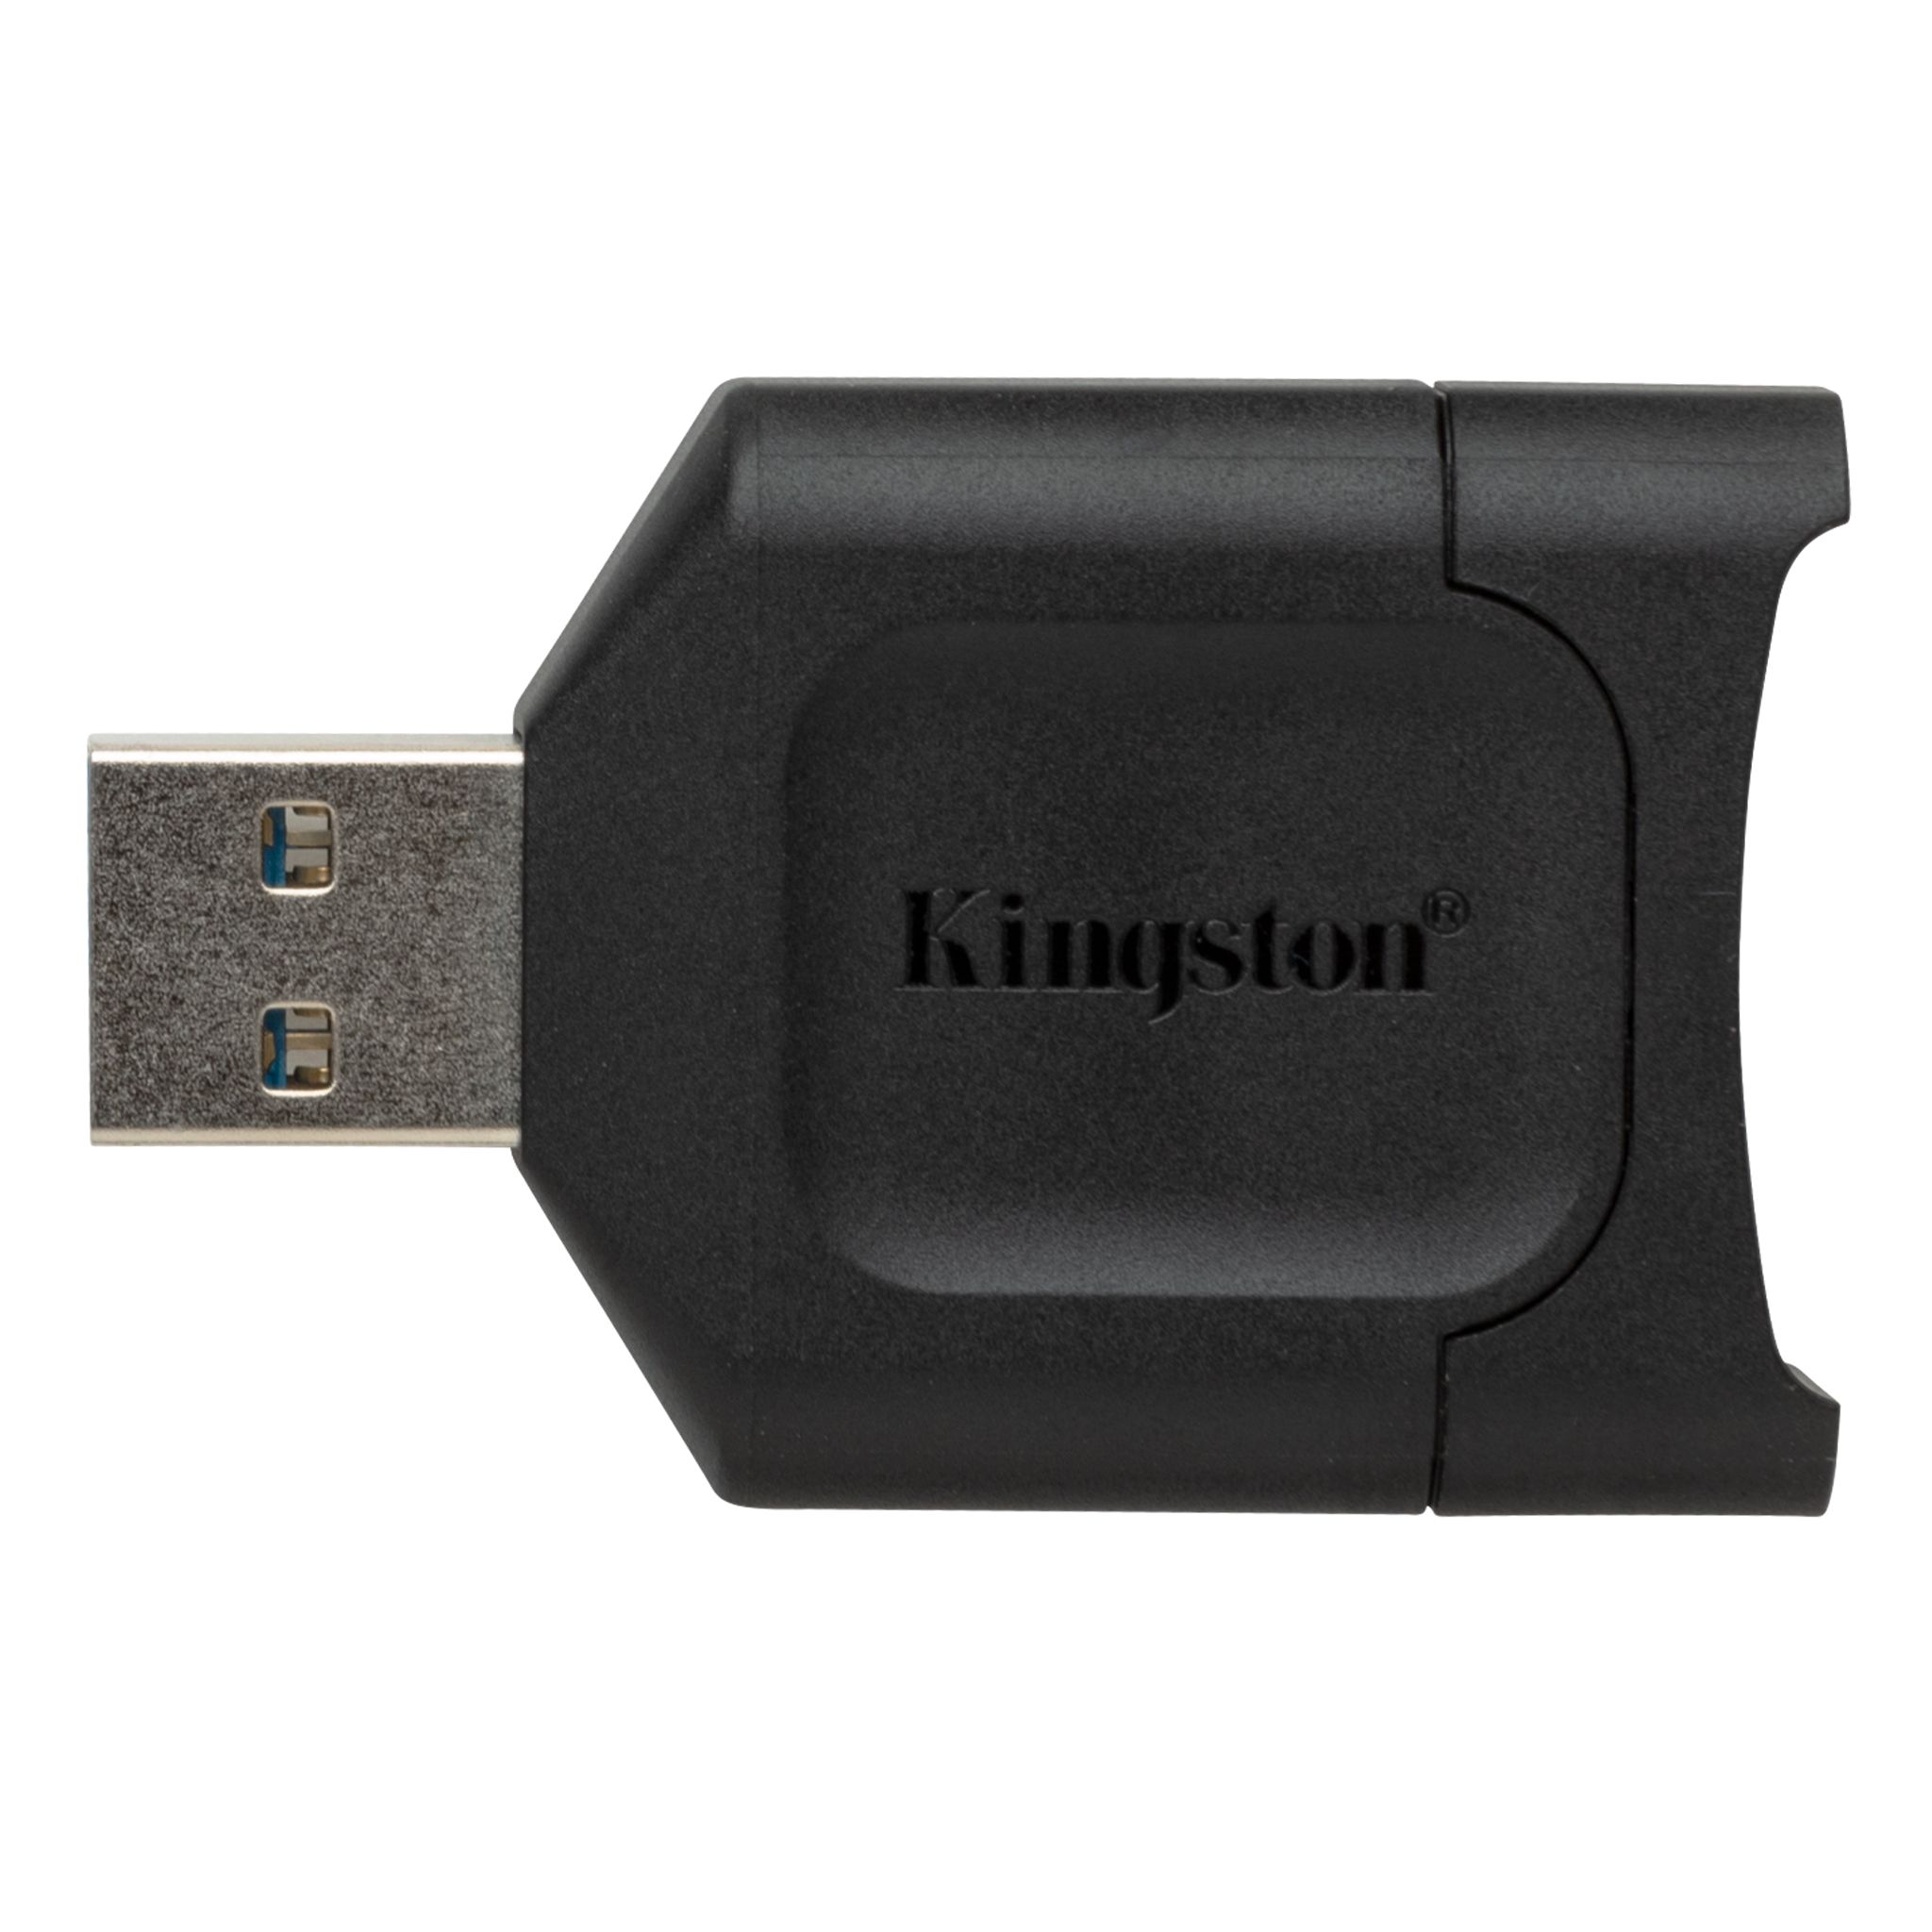 CARD READER extern LOGILINK, interfata USB 2.0, citeste/scrie: SD, micro SD; plastic, albastru transparent 